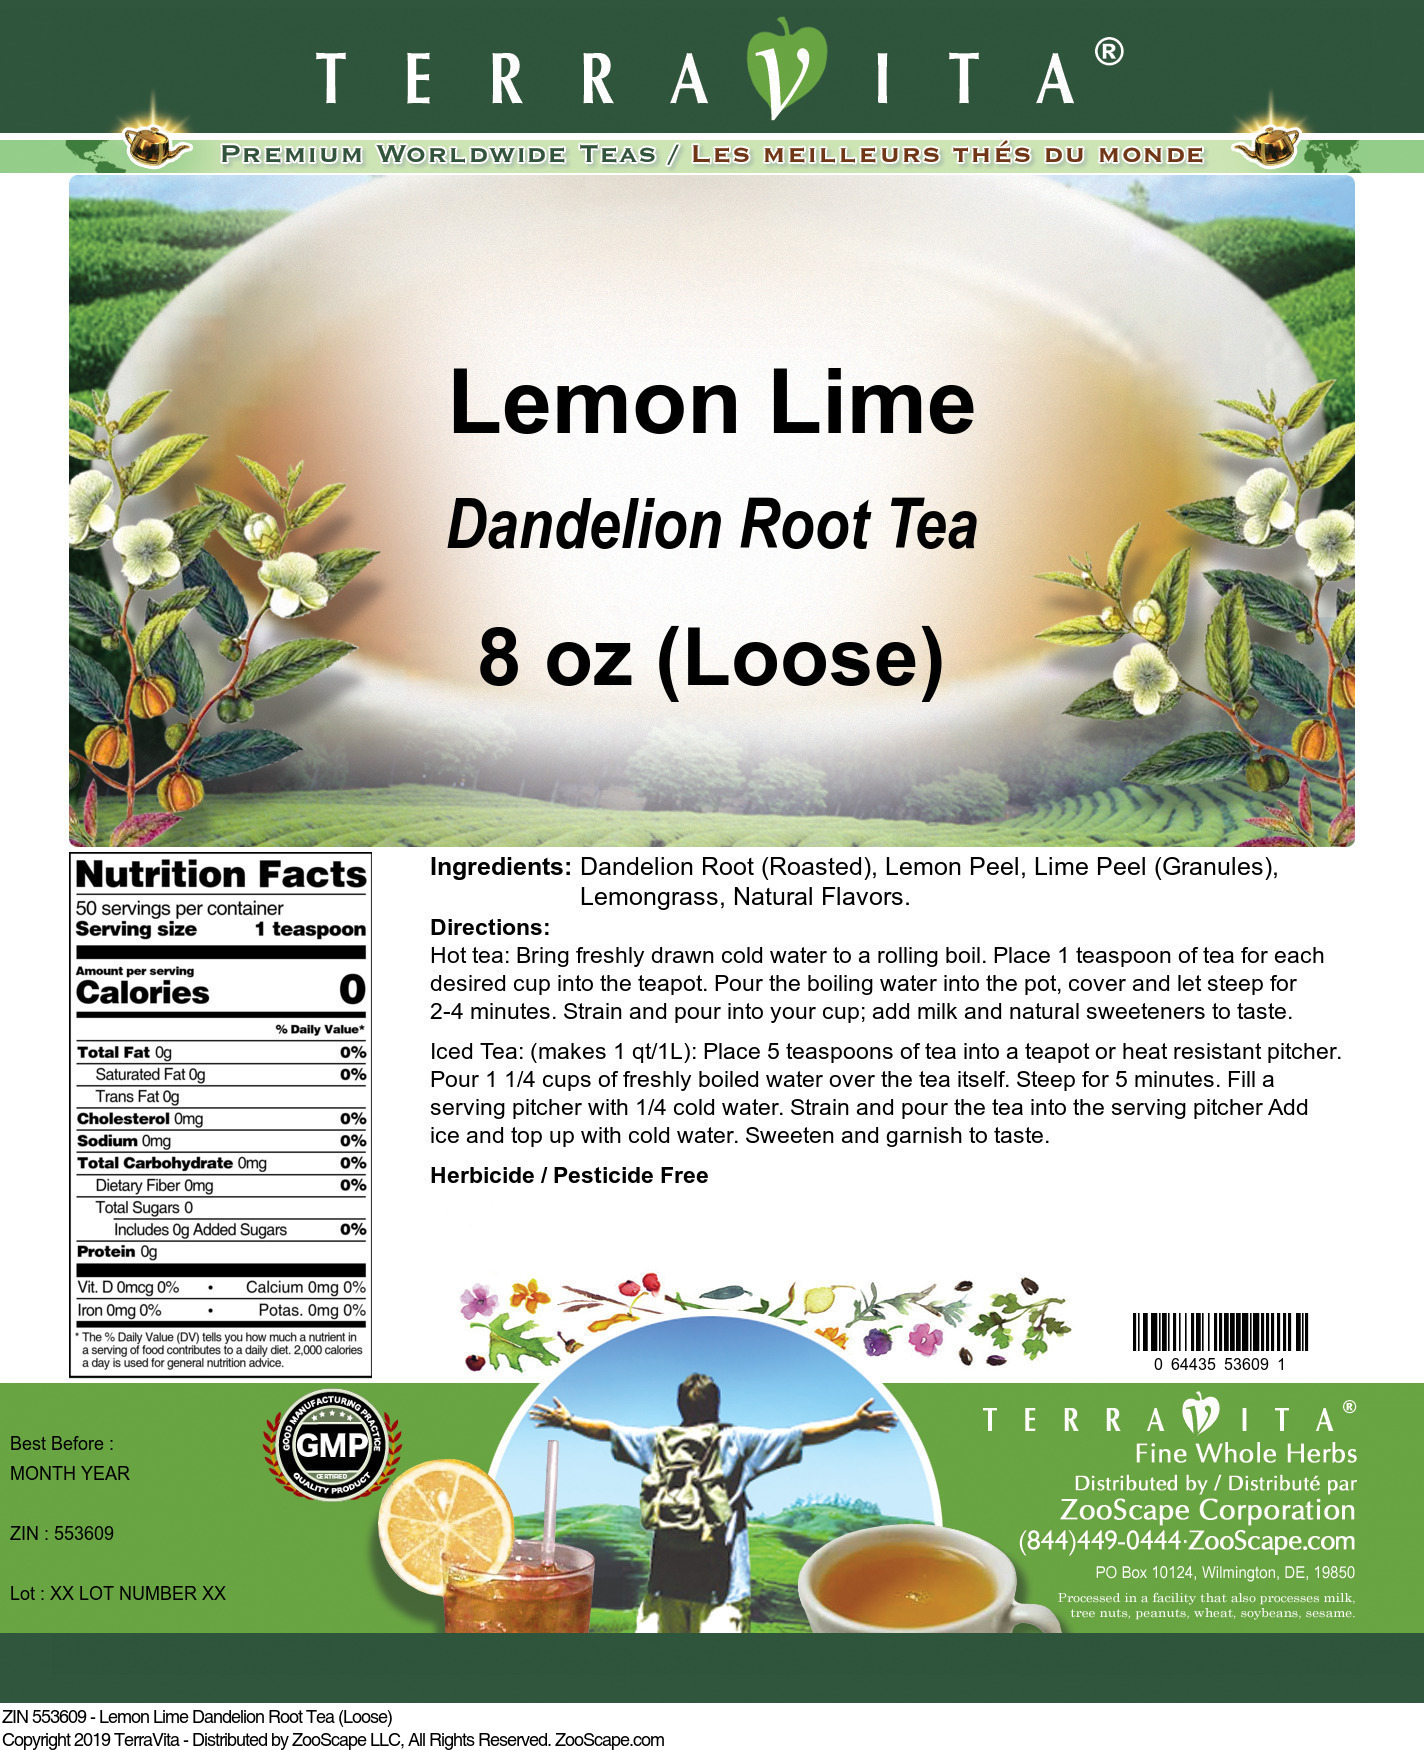 Lemon Lime Dandelion Root Tea (Loose) - Label